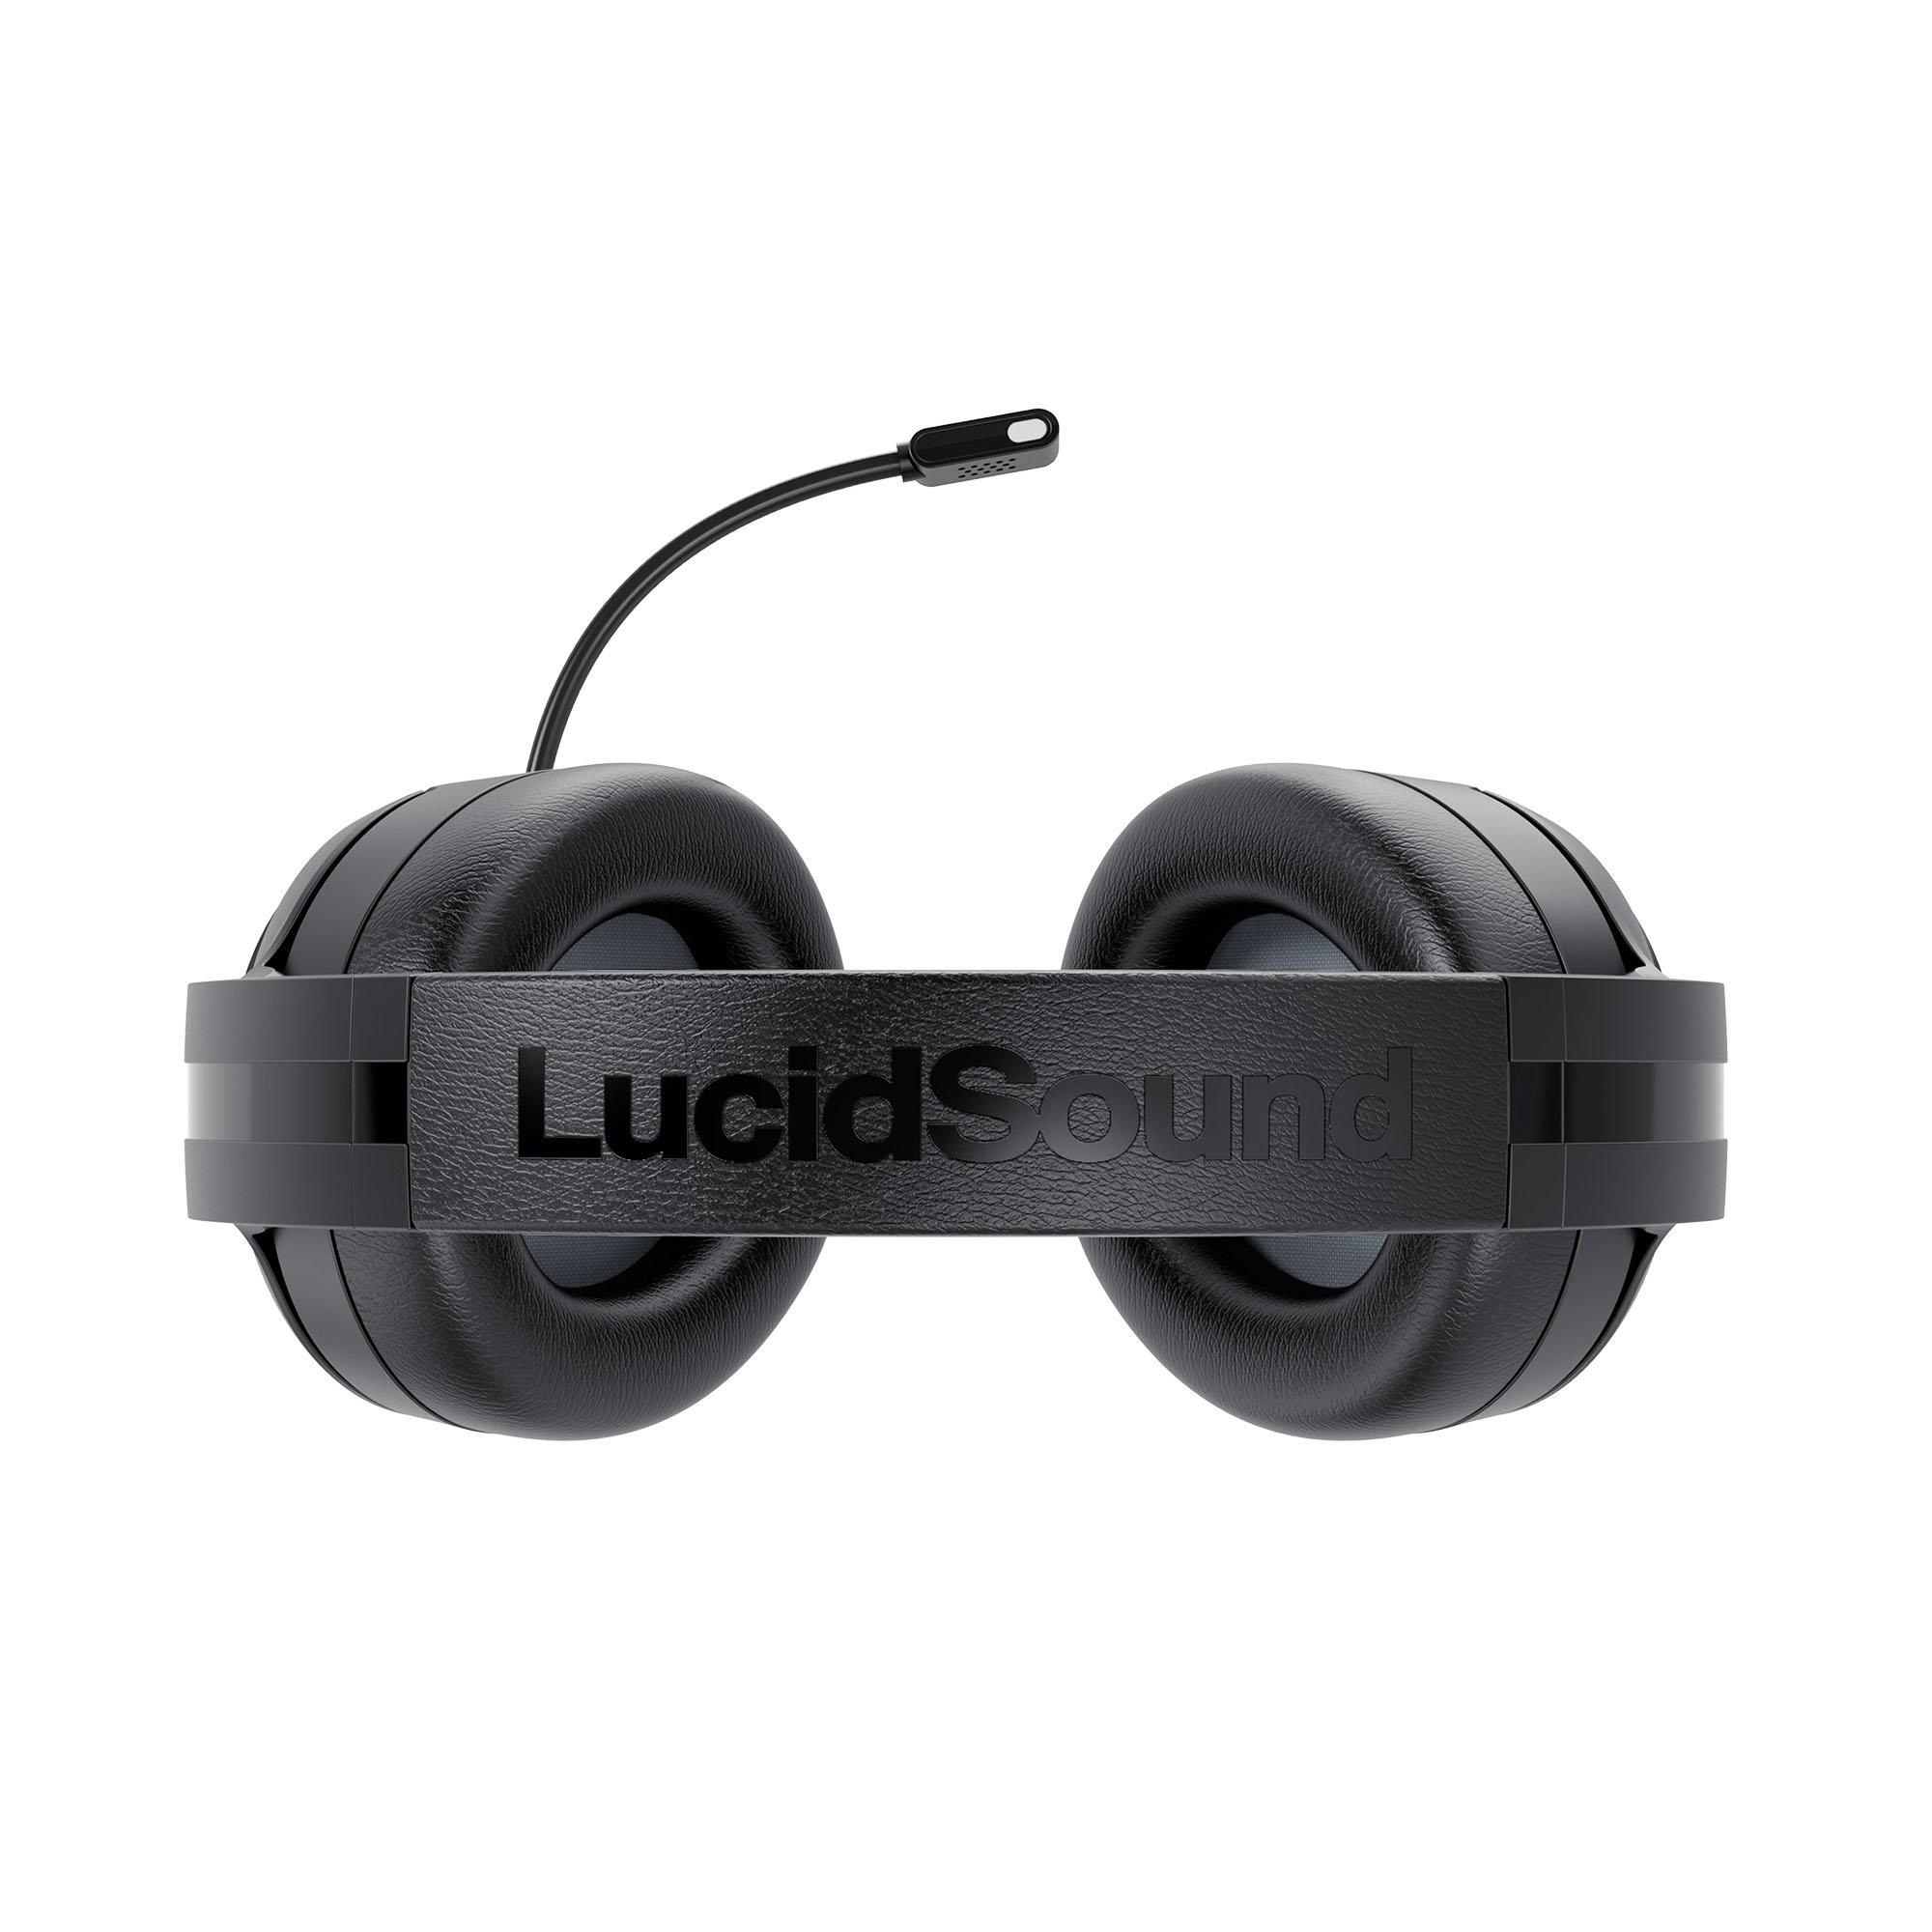 lucid headset xbox one